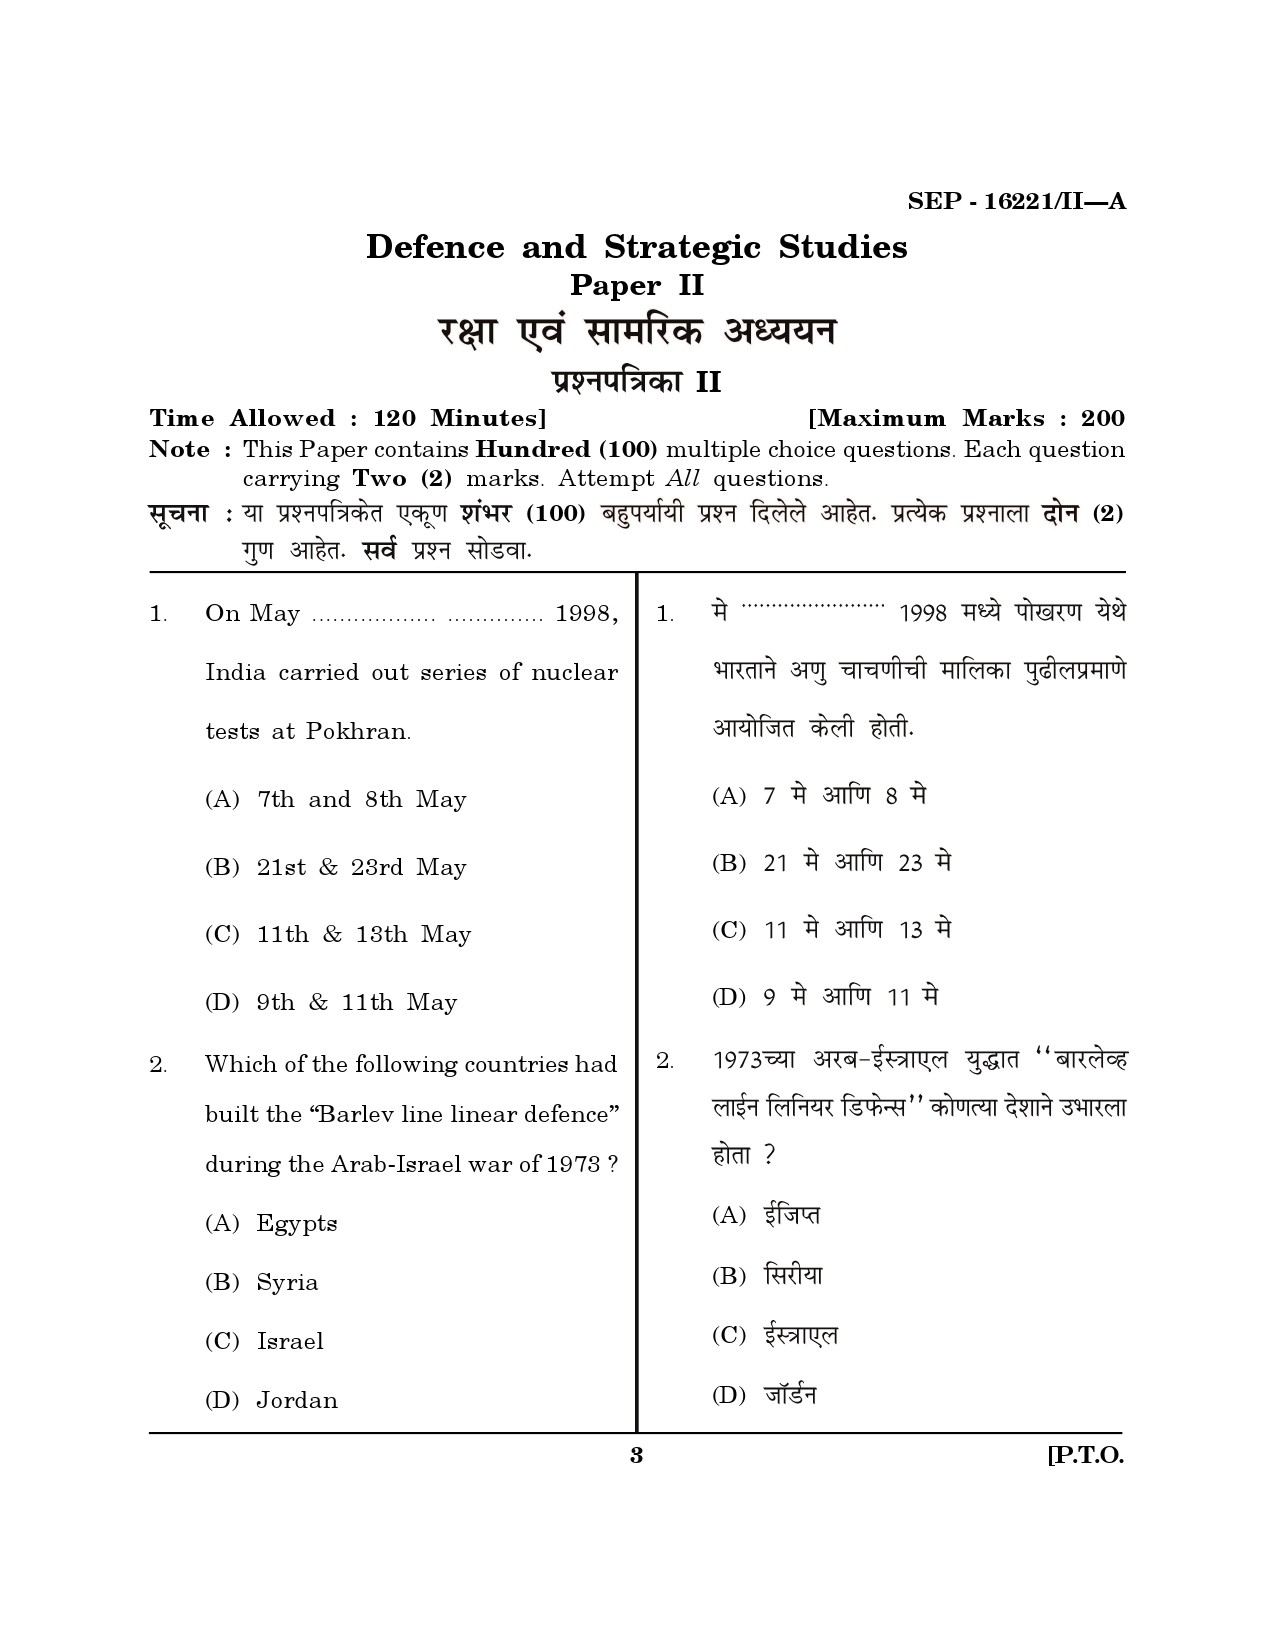 Maharashtra SET Defence and Strategic Studies Exam Question Paper September 2021 2